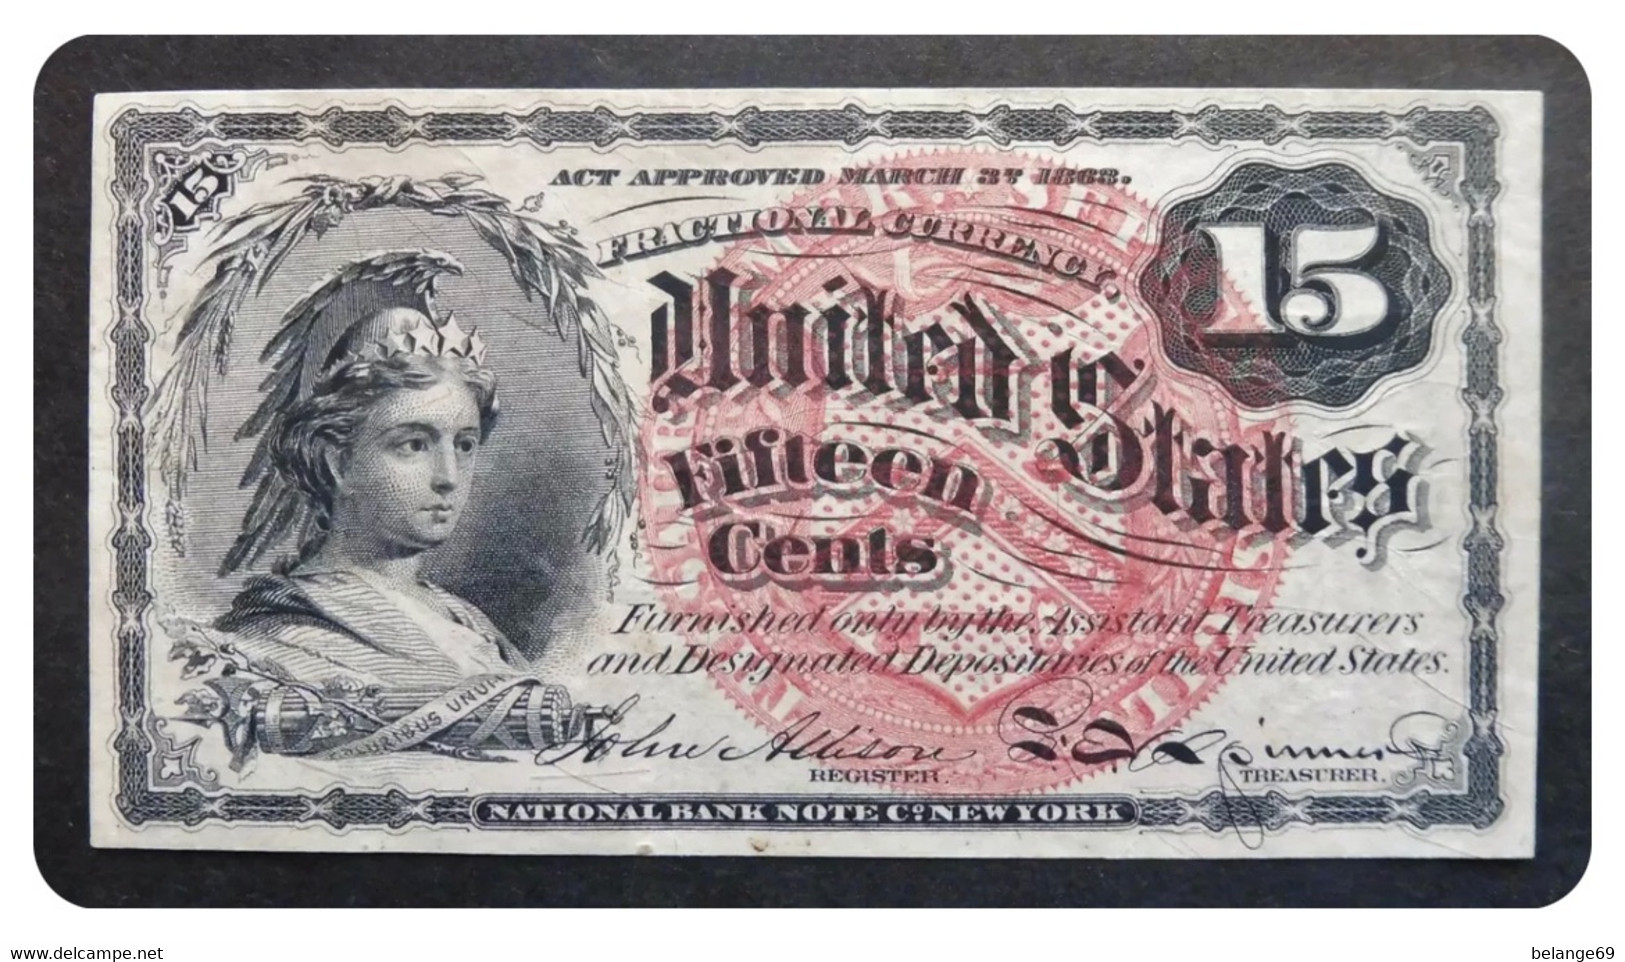 Etats Unis D'Amérique - 15 Cents - 3 Mars 1863 - Billetes De Estados Unidos (1862-1923)